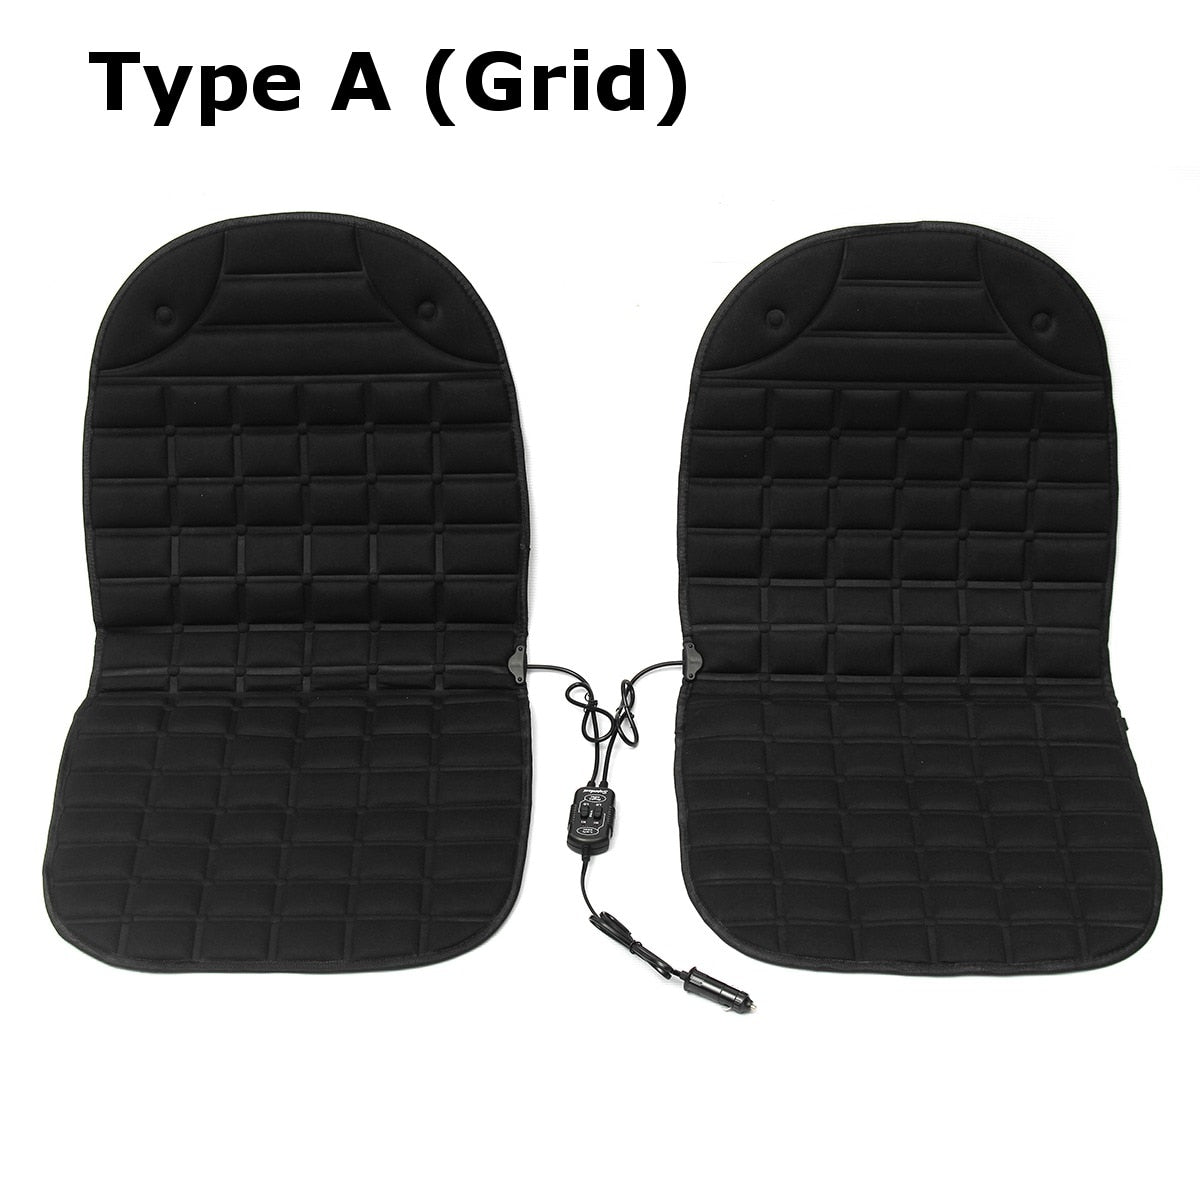 iMounTEK 12V Heated Car Seat Cushion Cover w/ Adjustable